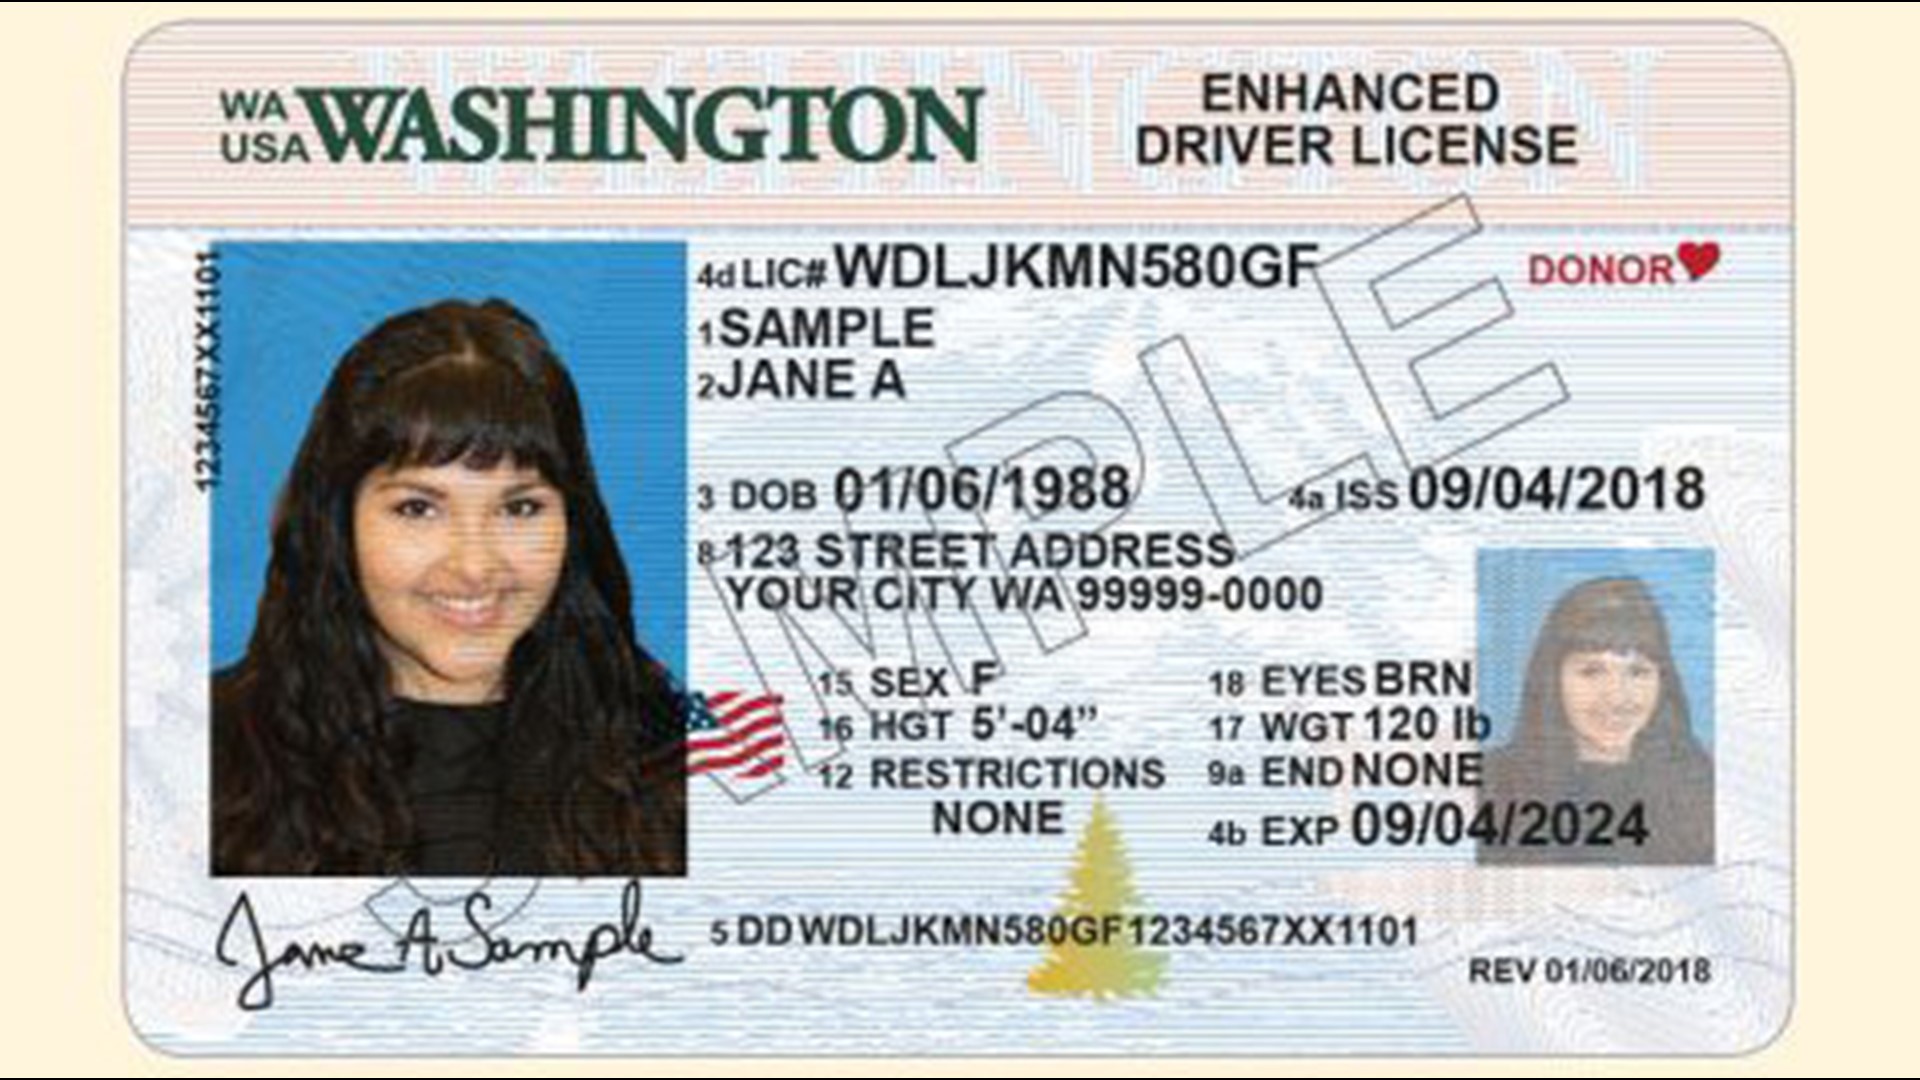 Washington Drivers License Numbers Change Tuesday